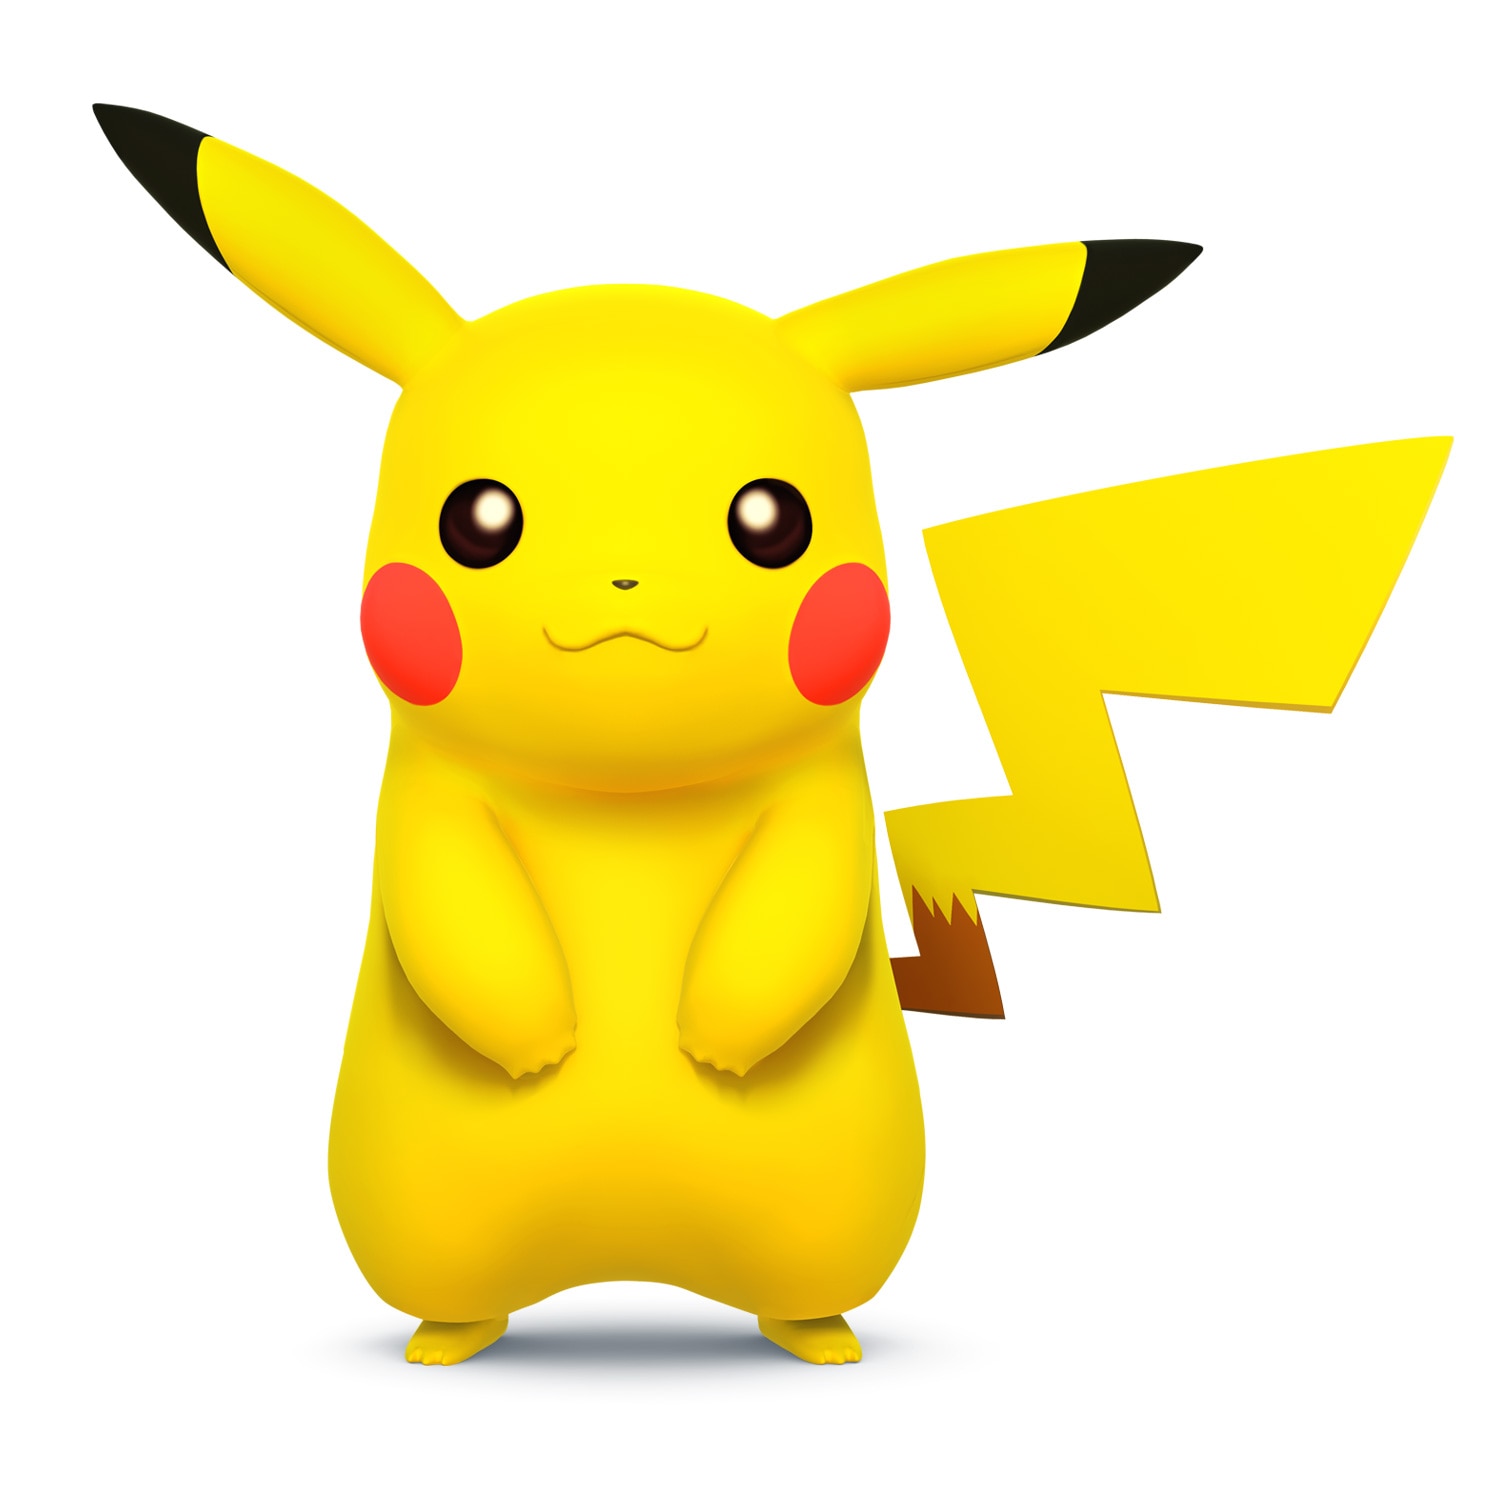 Pokemon Go 攻略：分享 8 大秘訣讓您迅速提升 Level 和捕獲更多 Pokemon！ 3